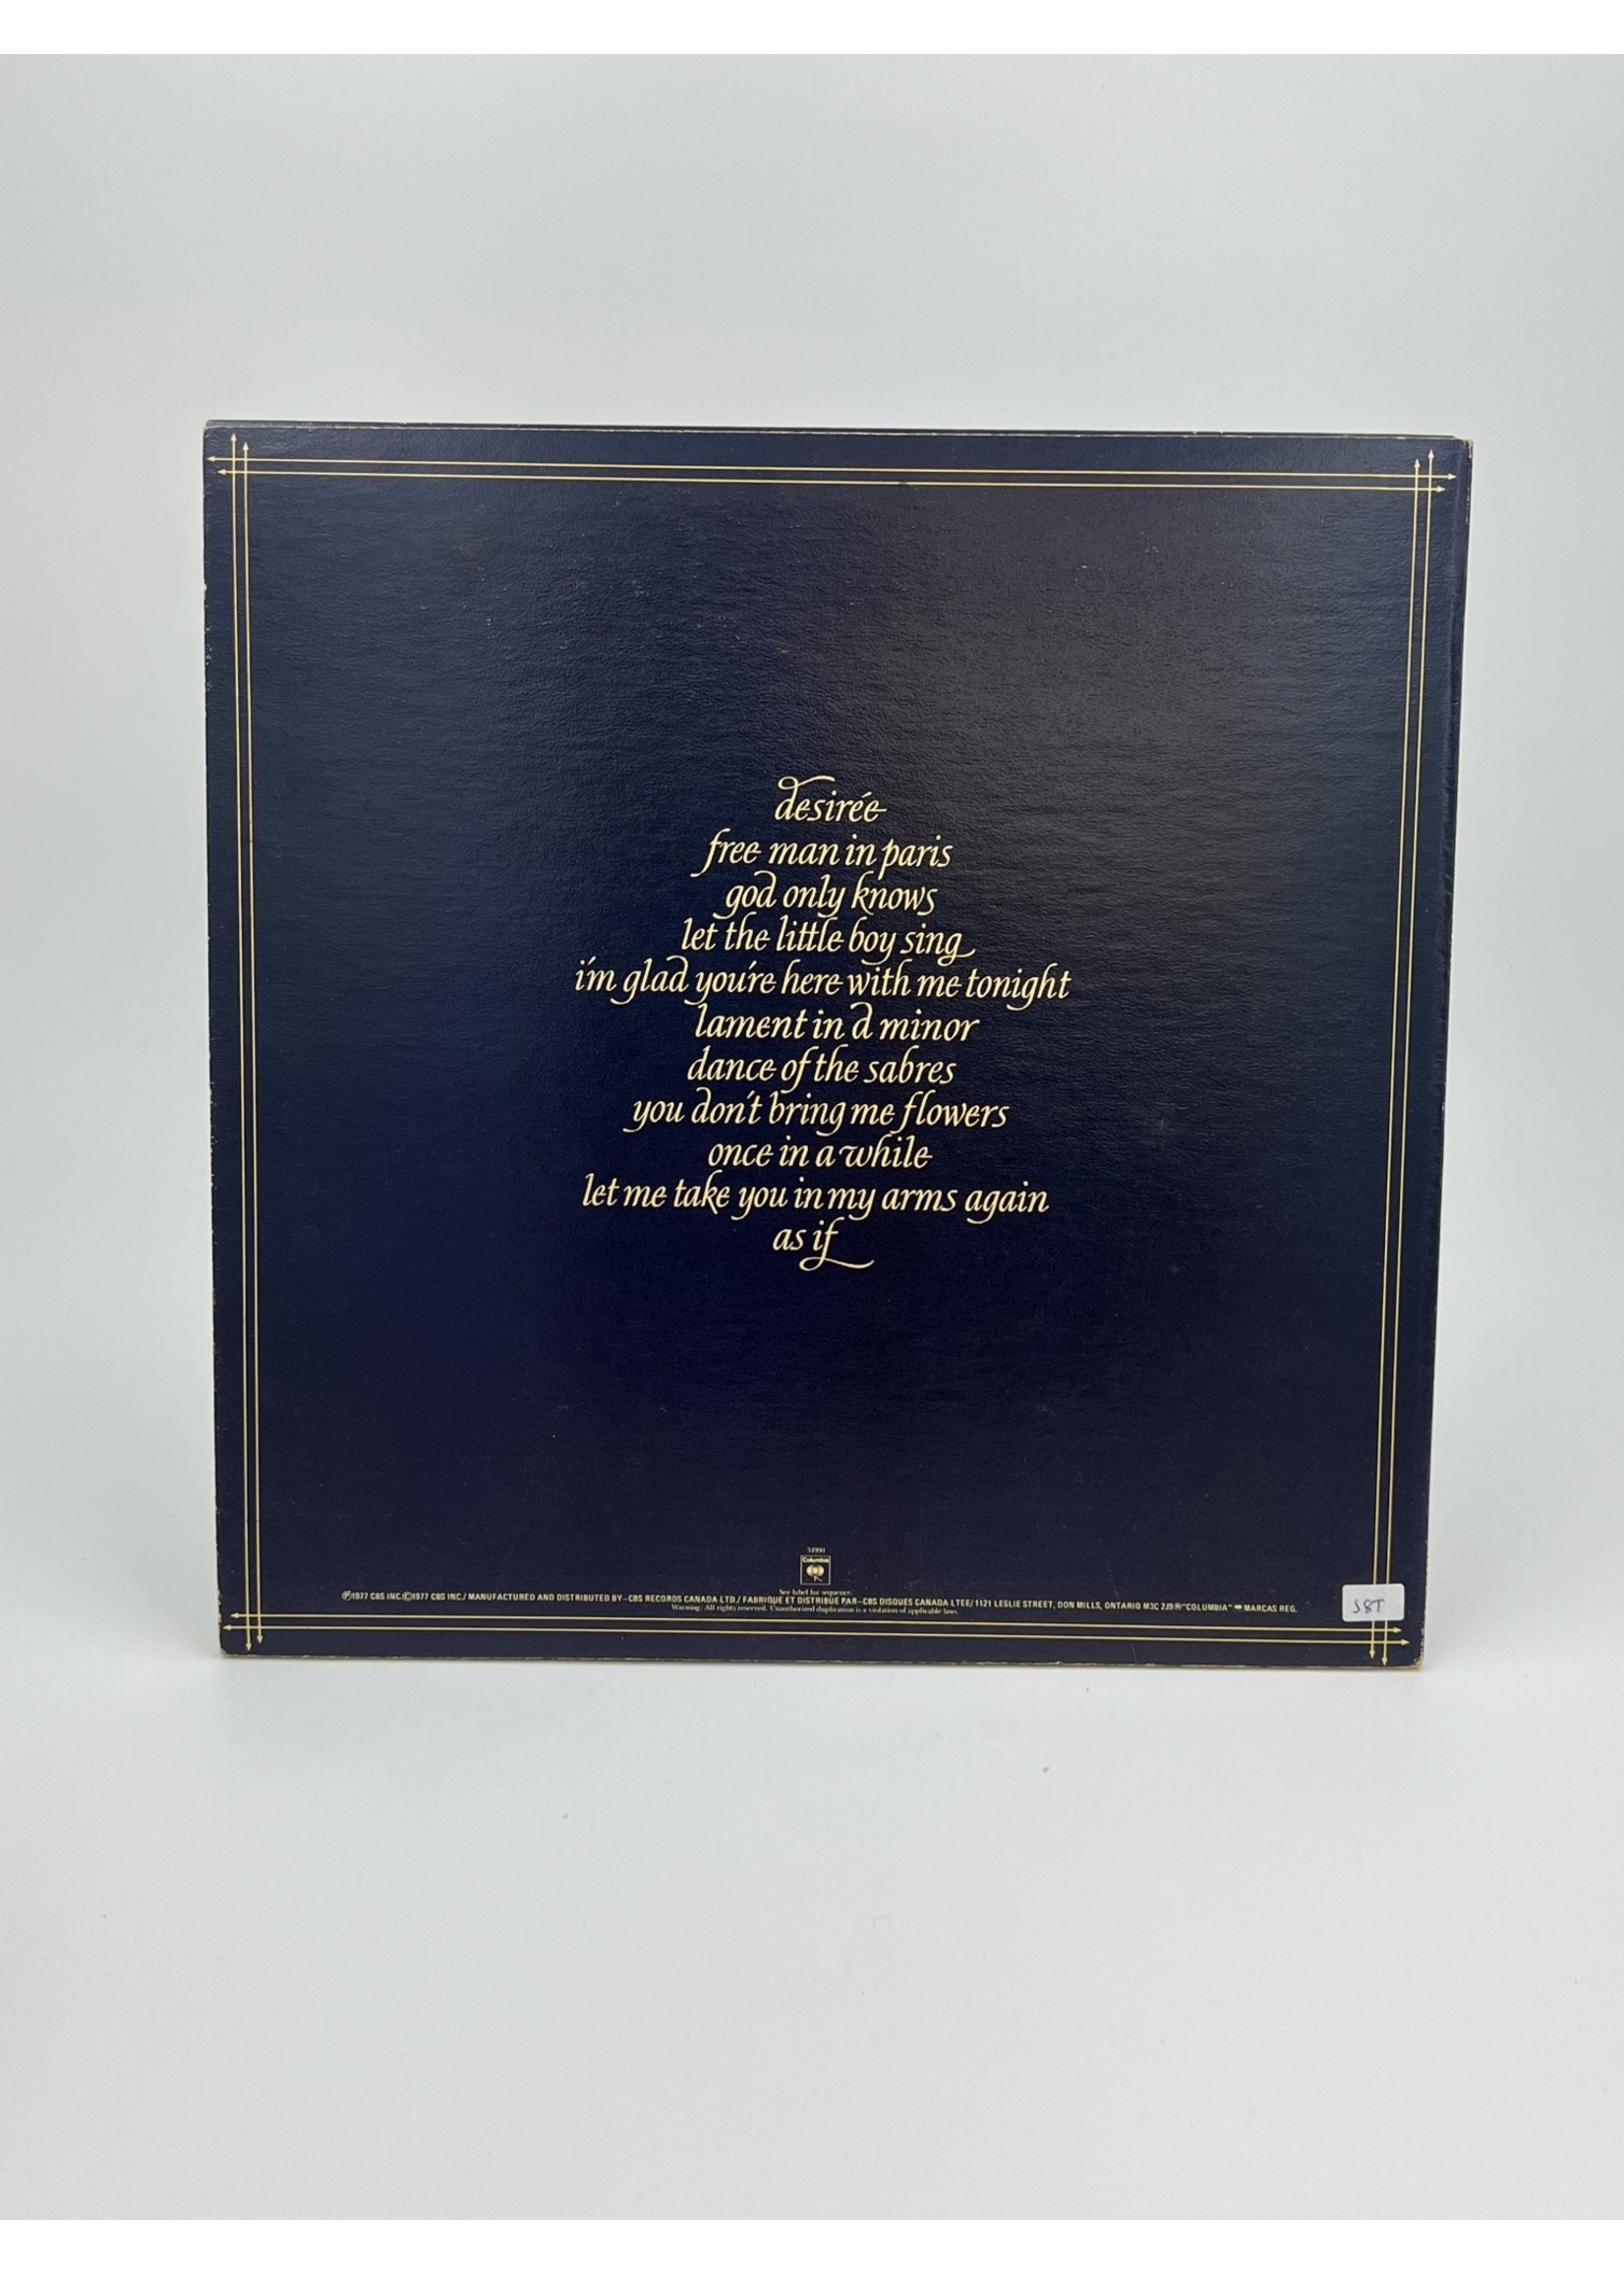 LP Neil Diamond Im glad youre here with me Tonight var5 LP Record